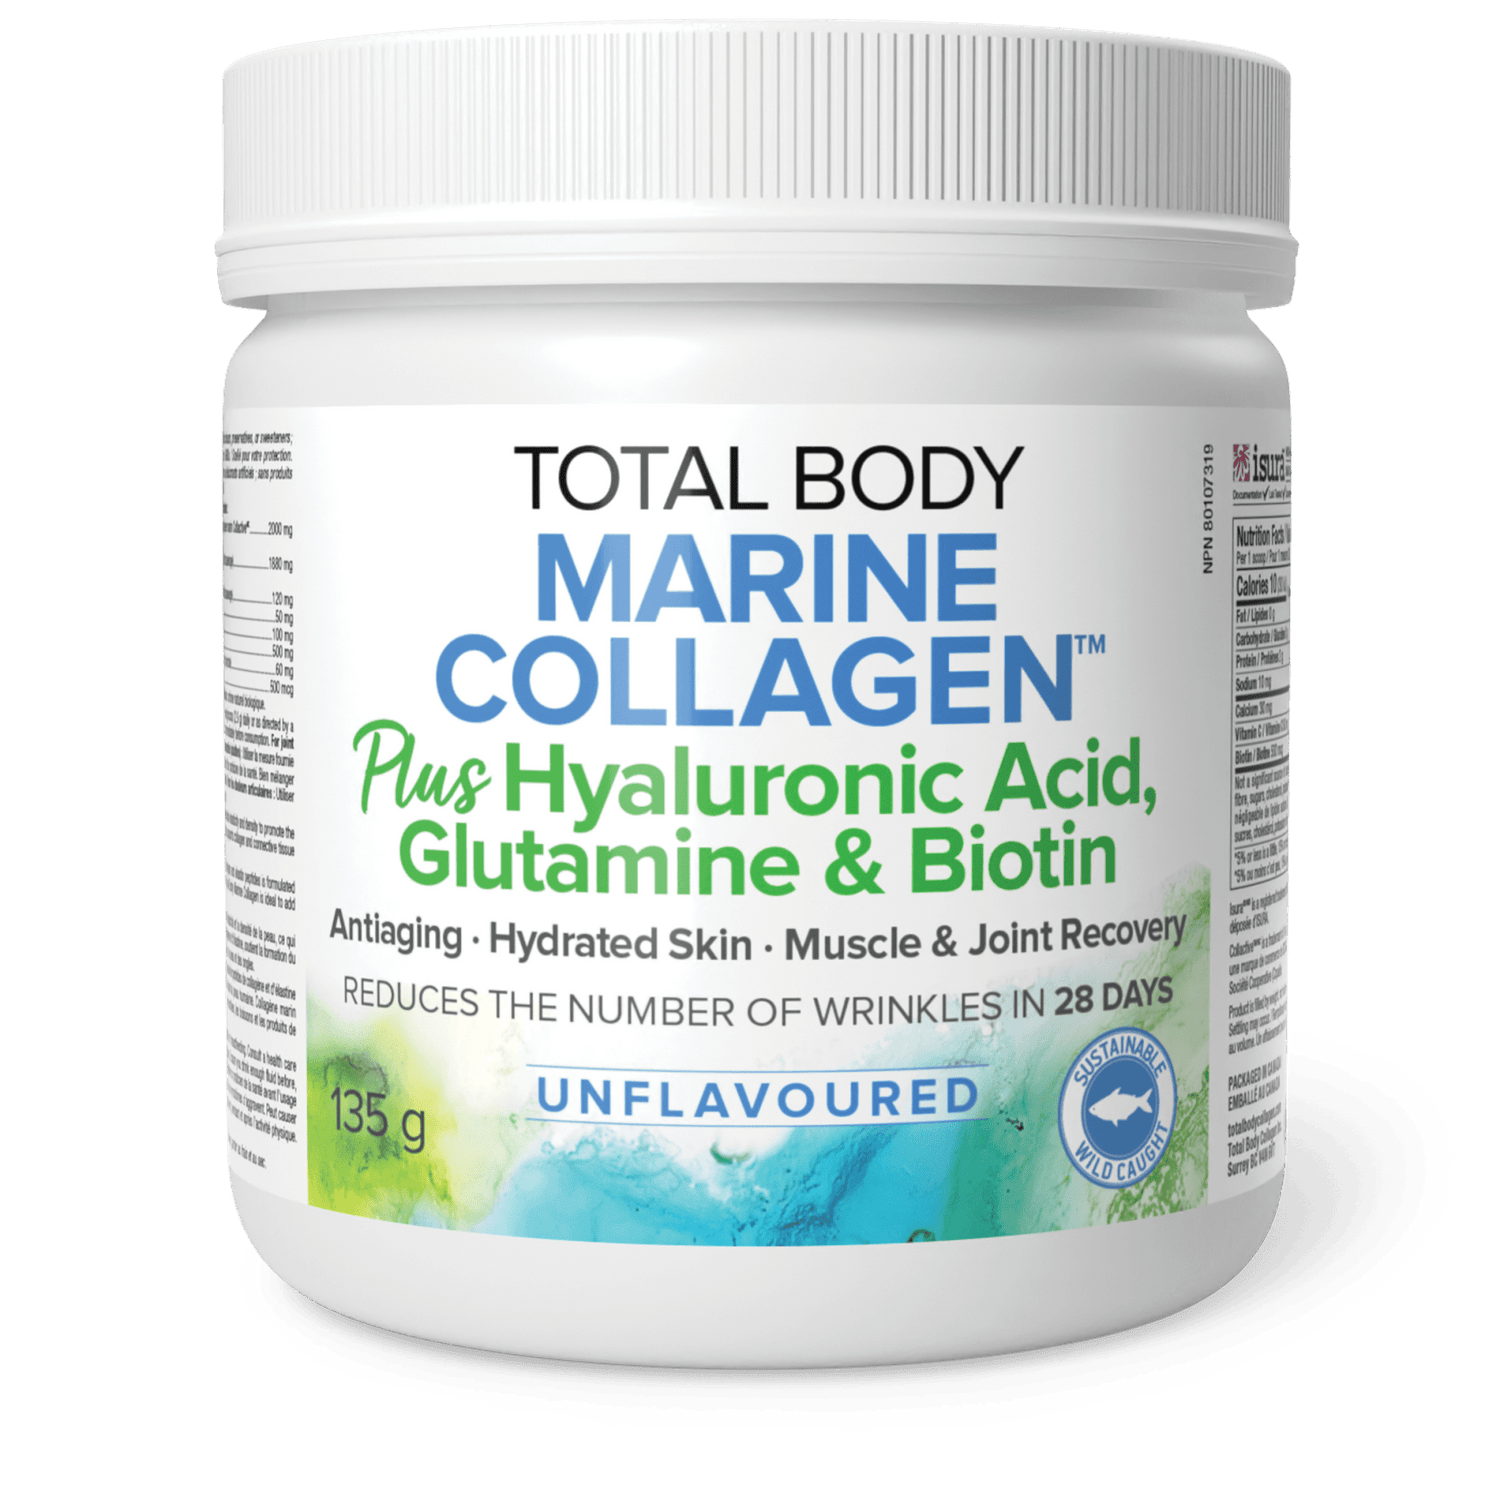 Total Body Marine Collagen Plus Hyaluronic Acid, Glutamine, & Biotin, Unflavoured, Total Body Collagen|v|image|2629